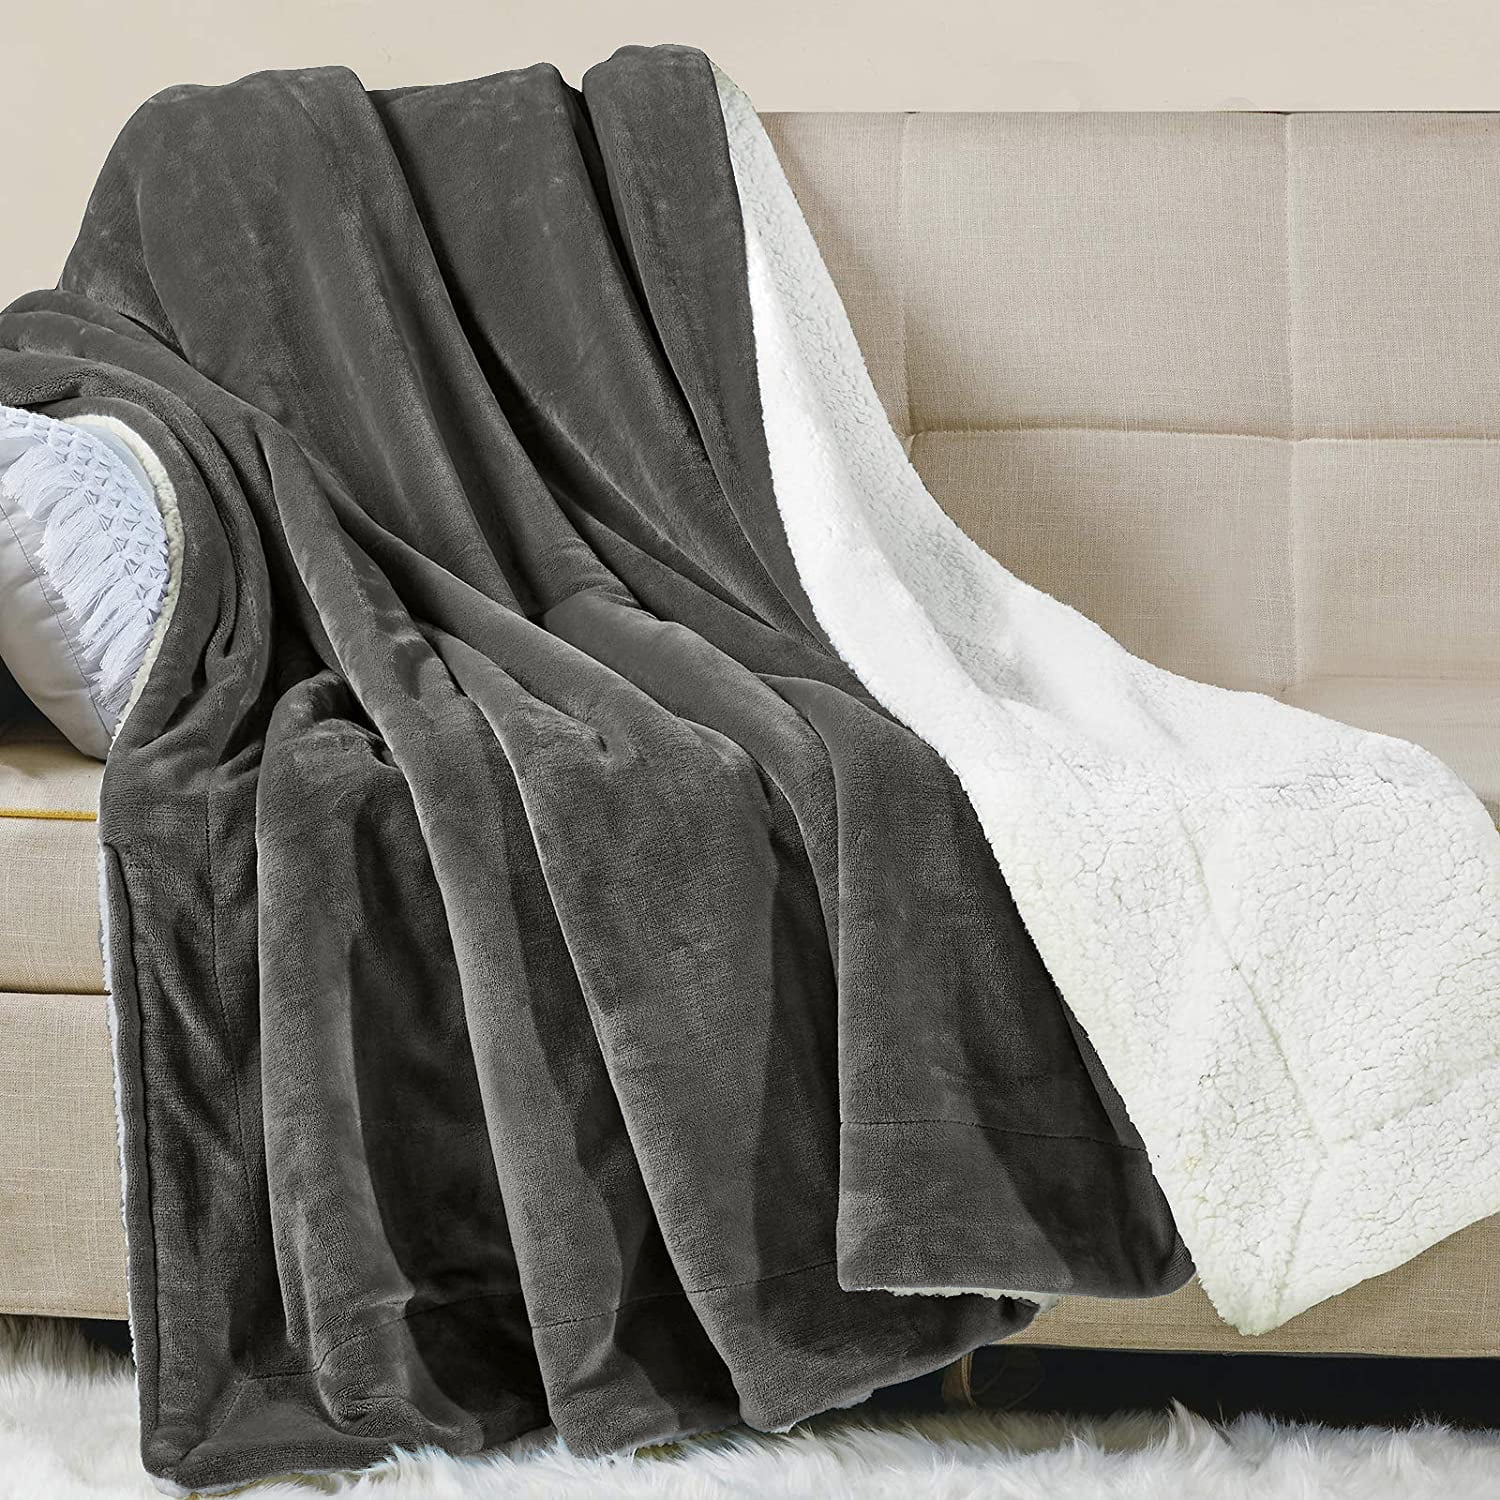 Decorative Bedroom Sherpa Blanket Lightweight for Adult Child Warm New Dalmatian Sofa Blanket Minky Blanket Throw Fleece Blankets